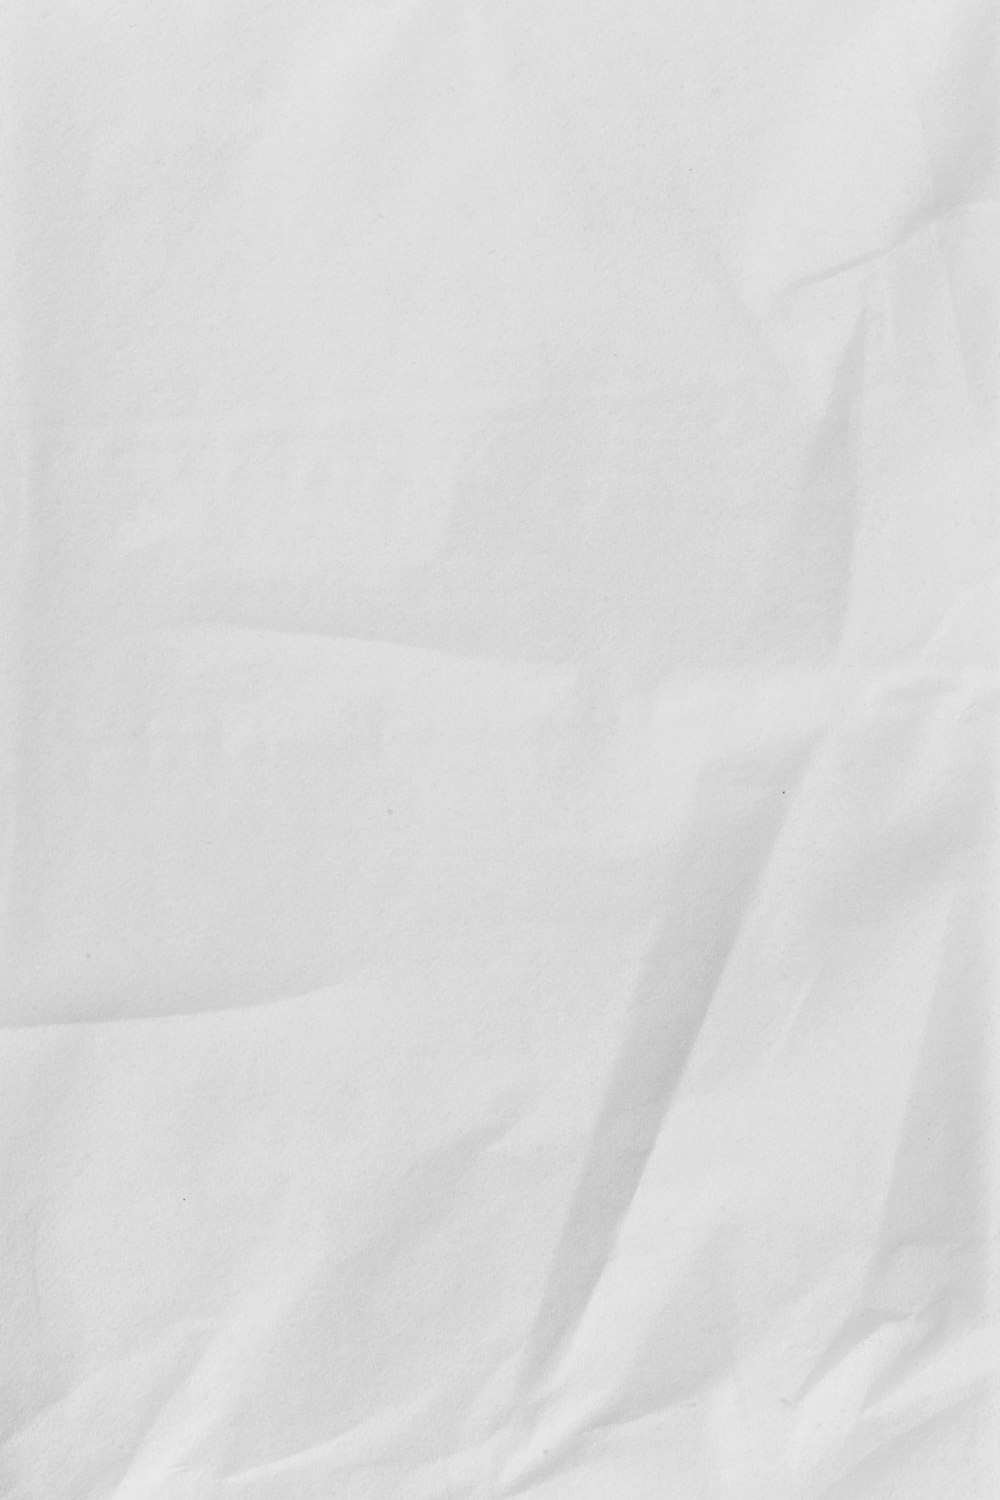 white printer paper with black print